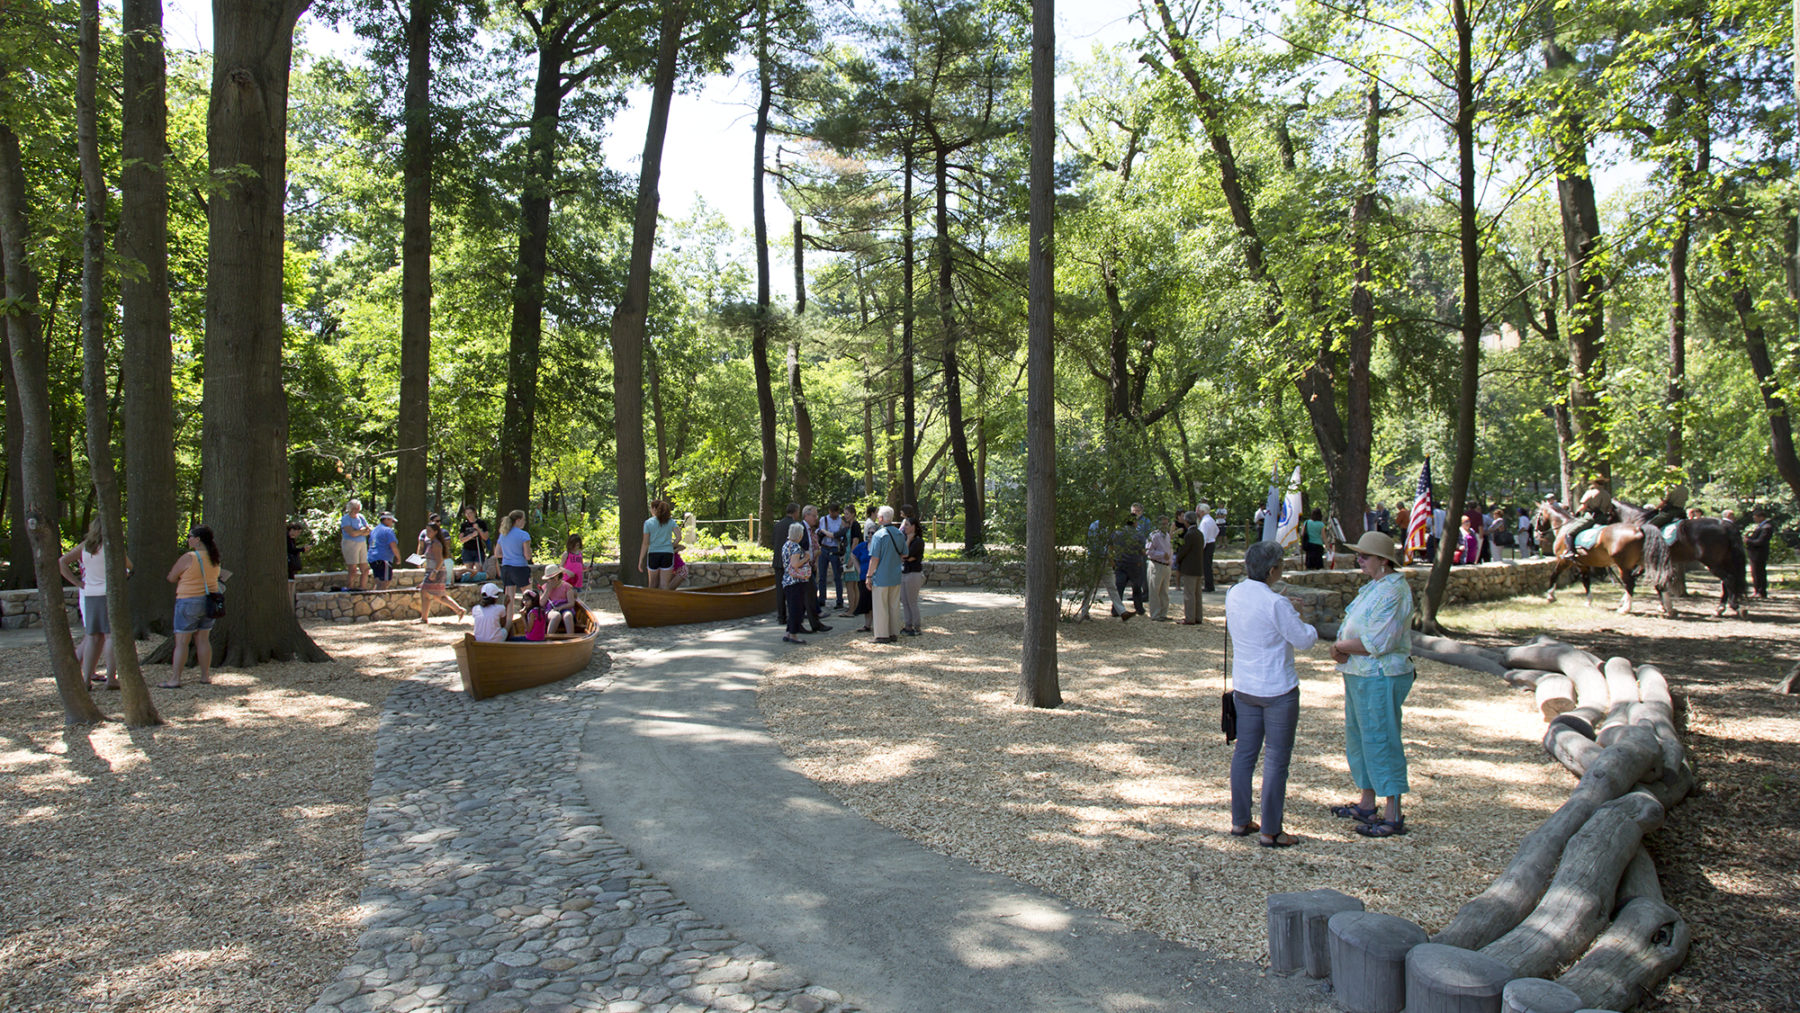 People stand around an open sensory garden